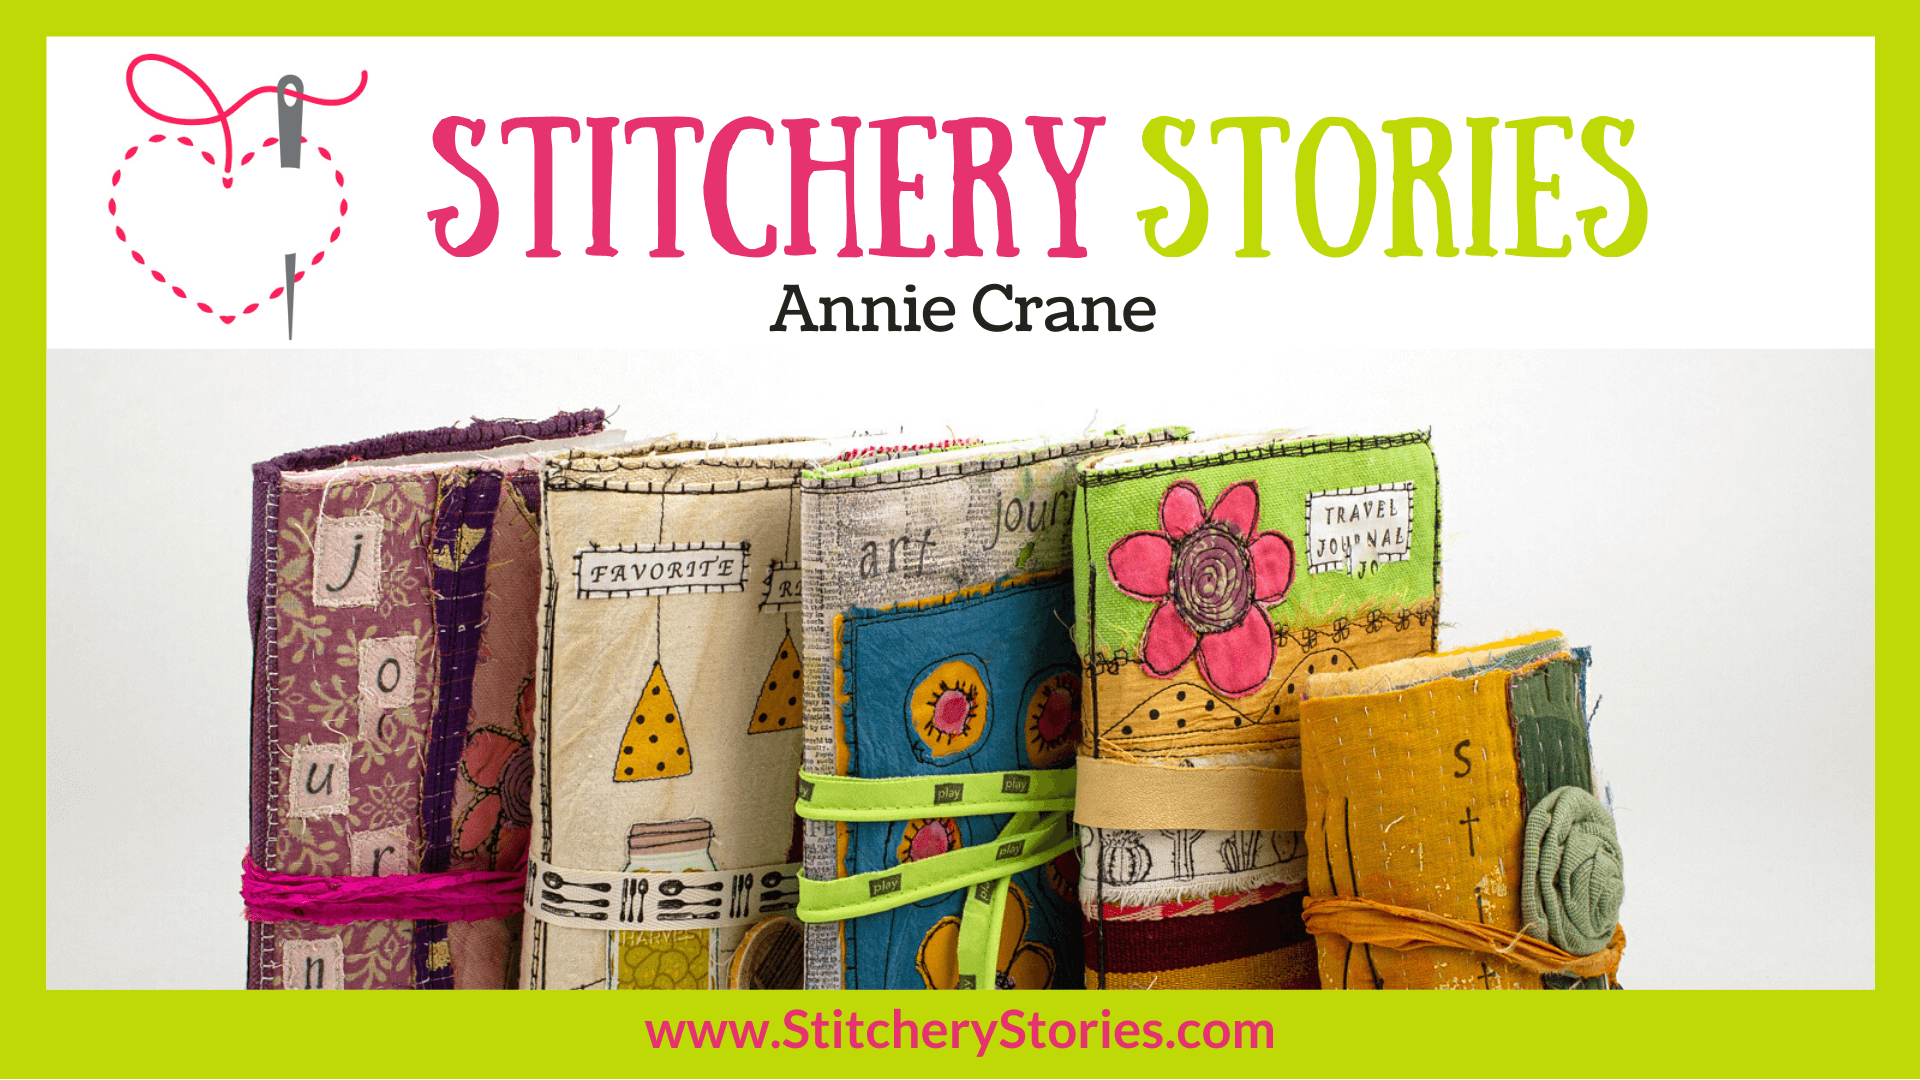 Annie Crane guest Stitchery Stories textile art podcast Wide Art